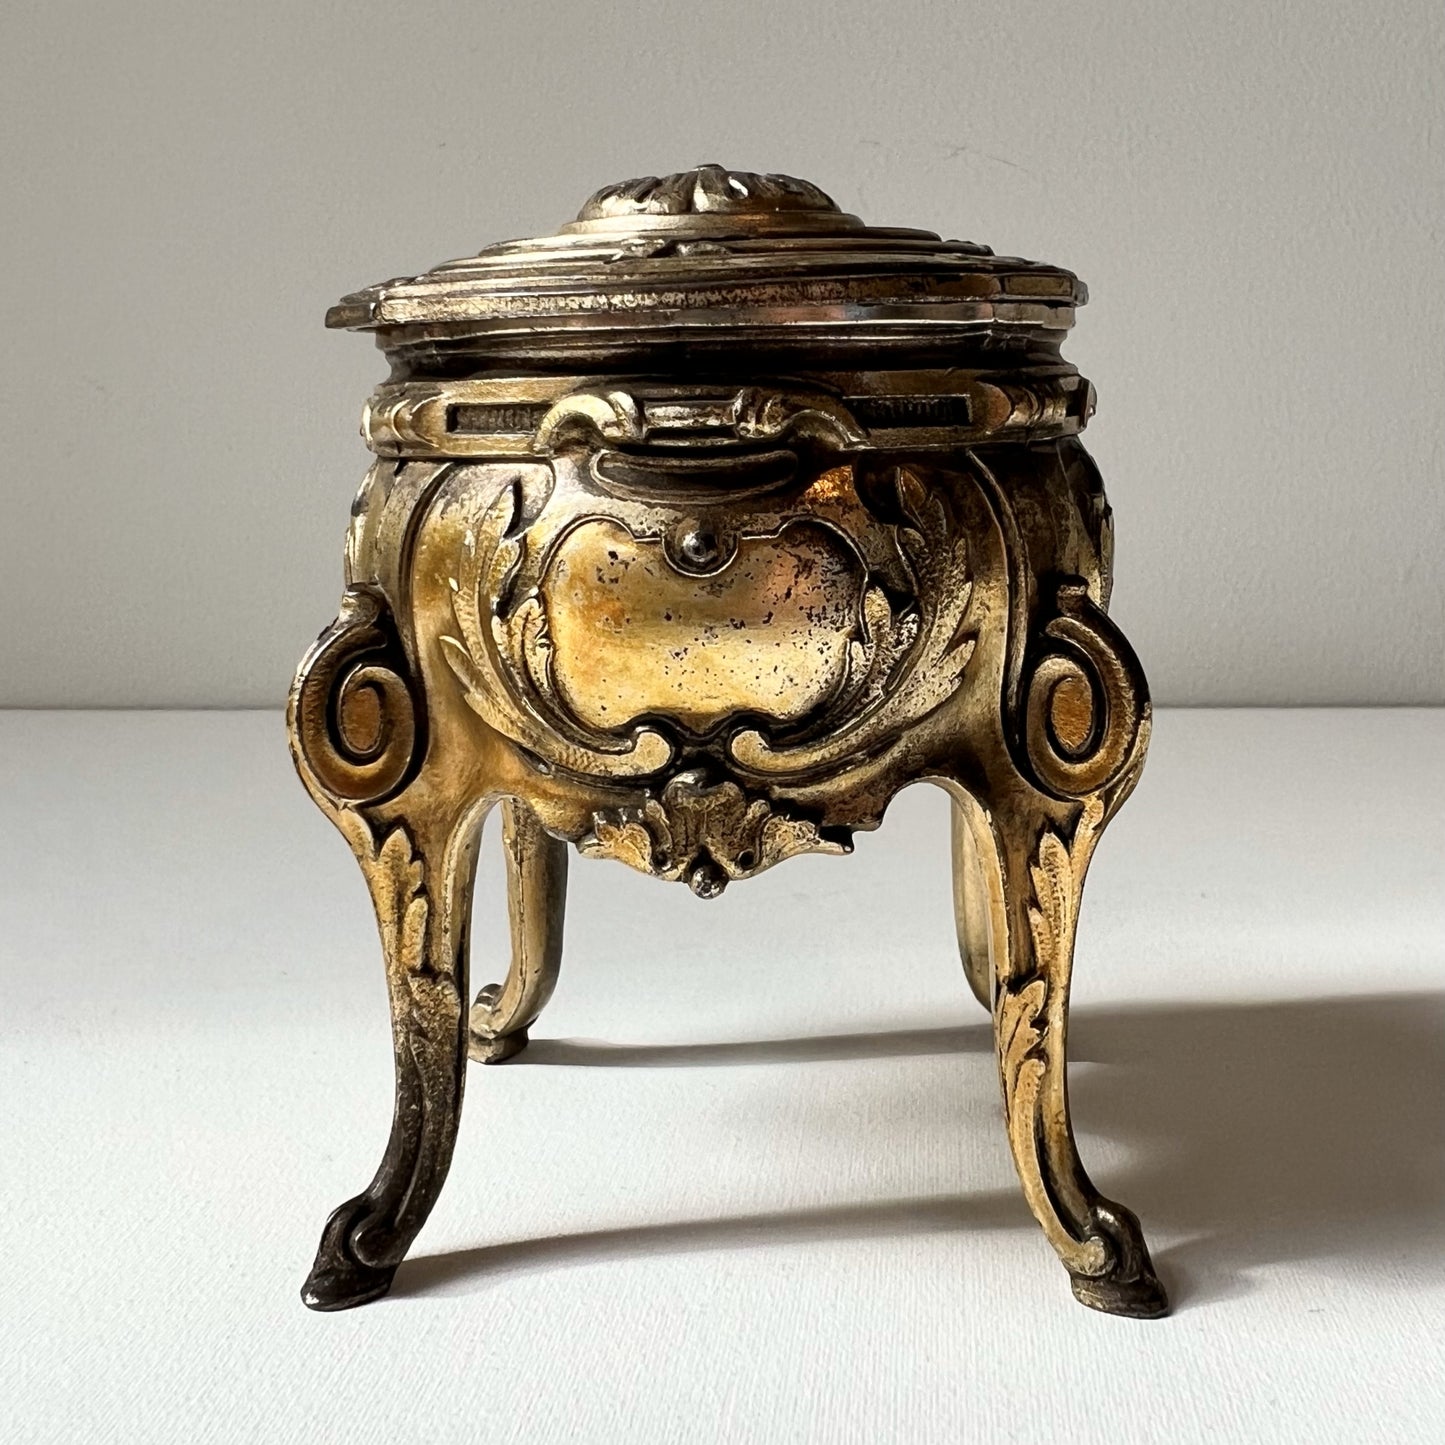 【Antique】France - 1900s Jewelry Box